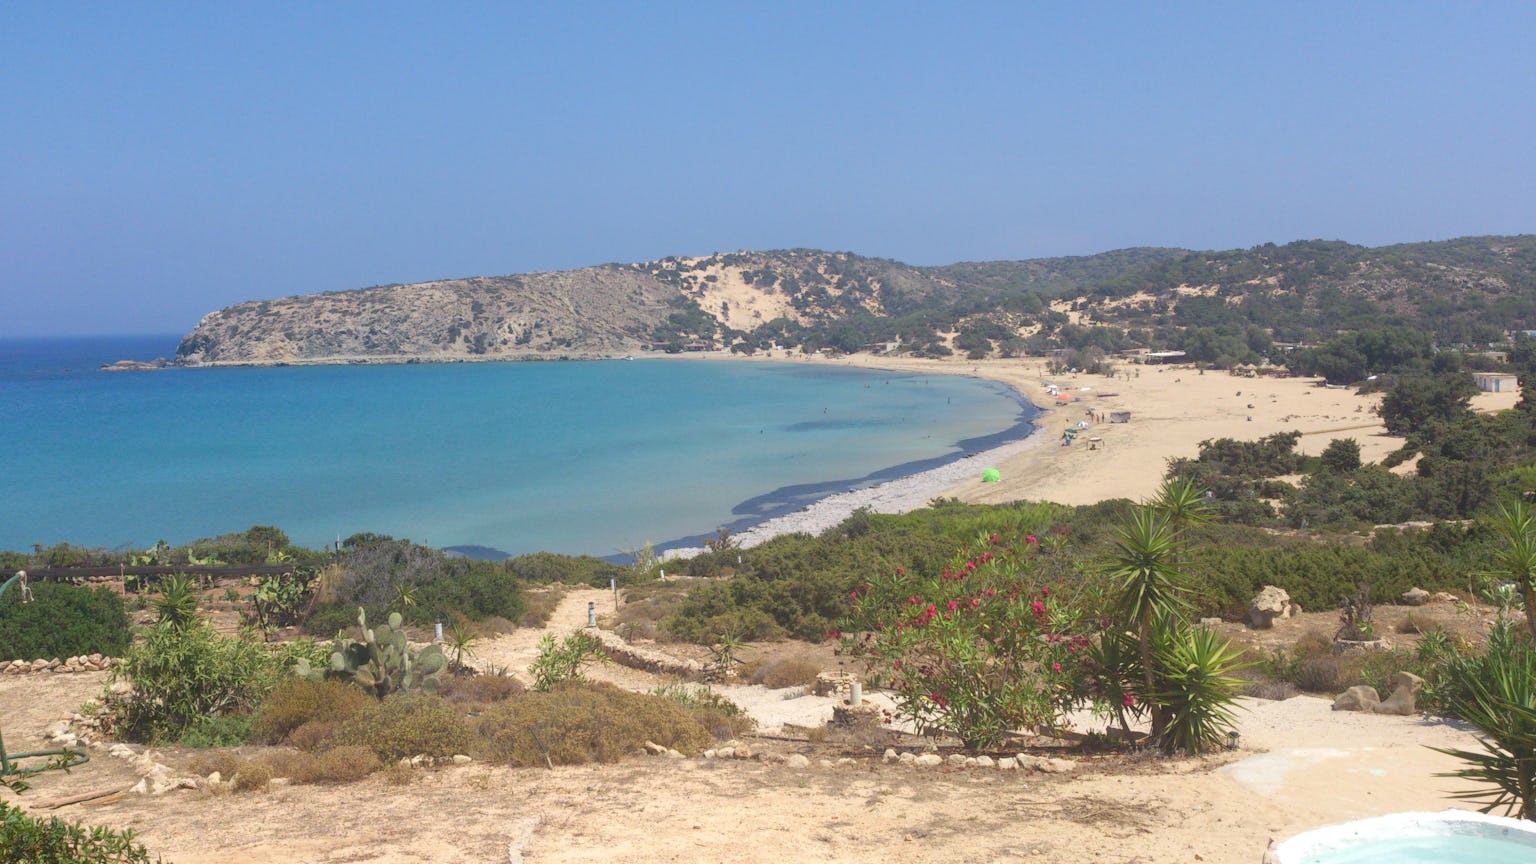 Sarakiniko: The Landmark Beach of Gavdos